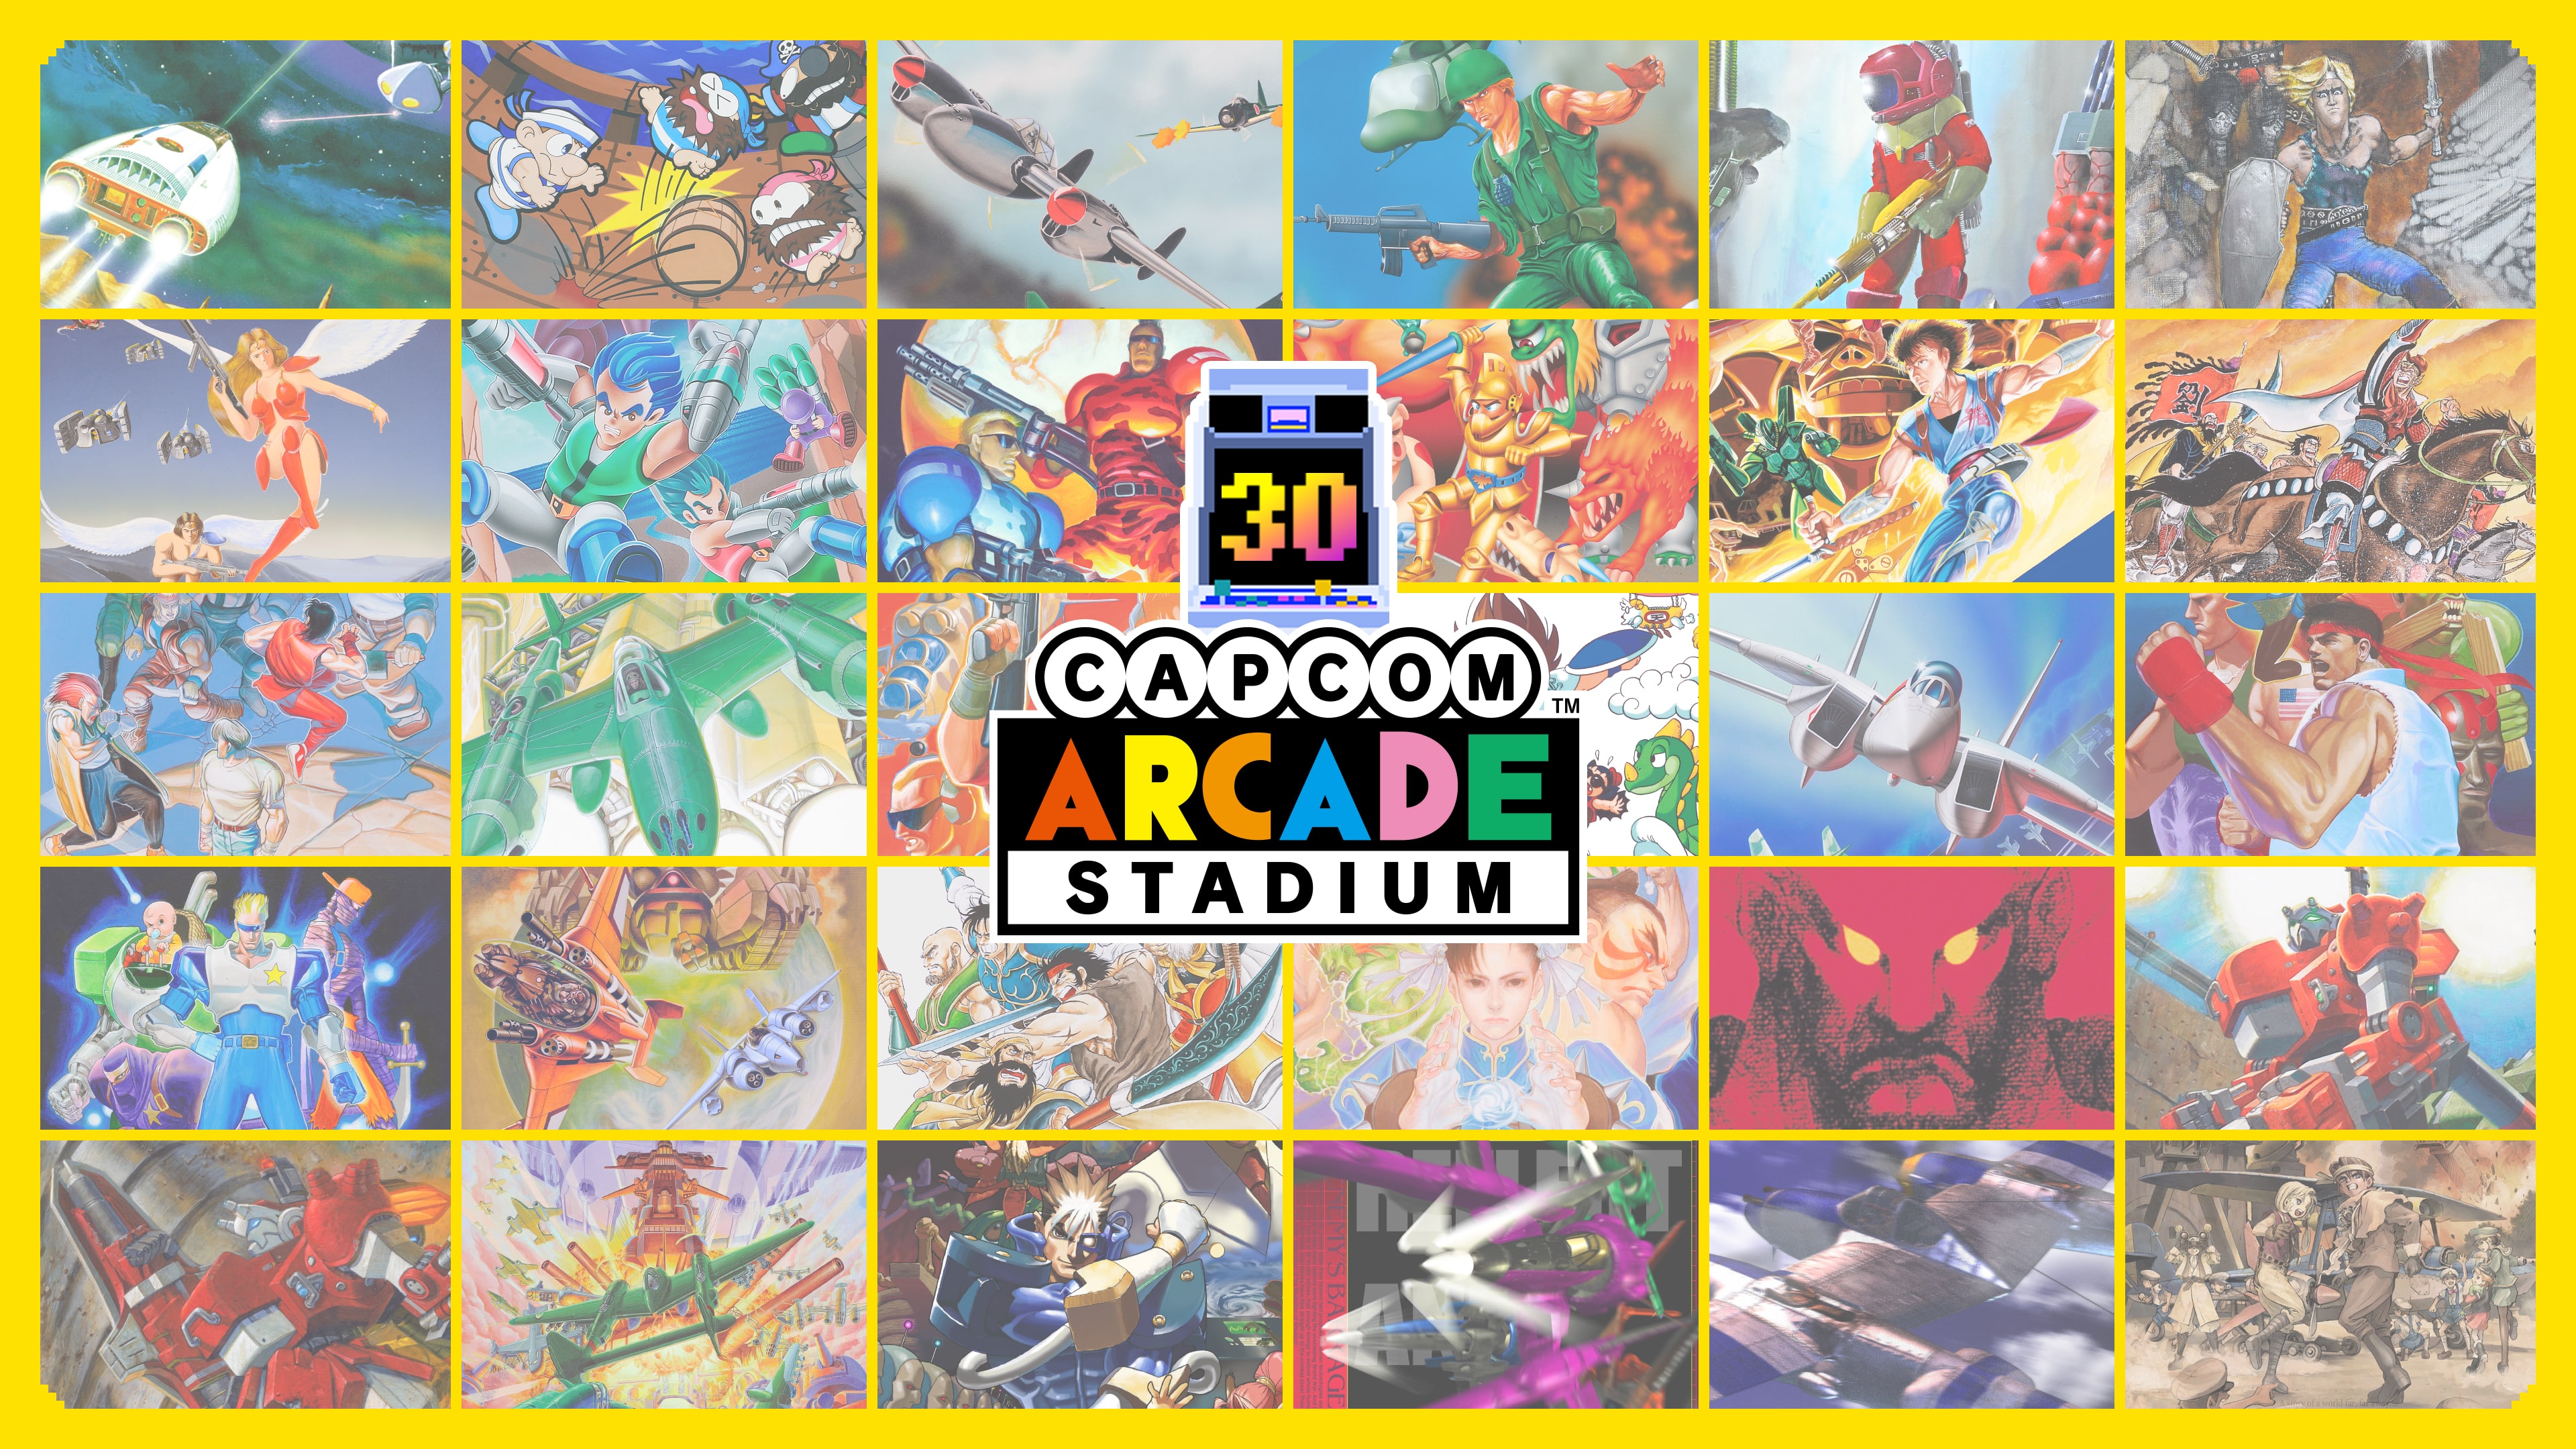 Capcom Arcade Stadium Packs 1, 2, and 3 (중국어(간체자), 한국어, 태국어, 영어, 일본어, 중국어(번체자))